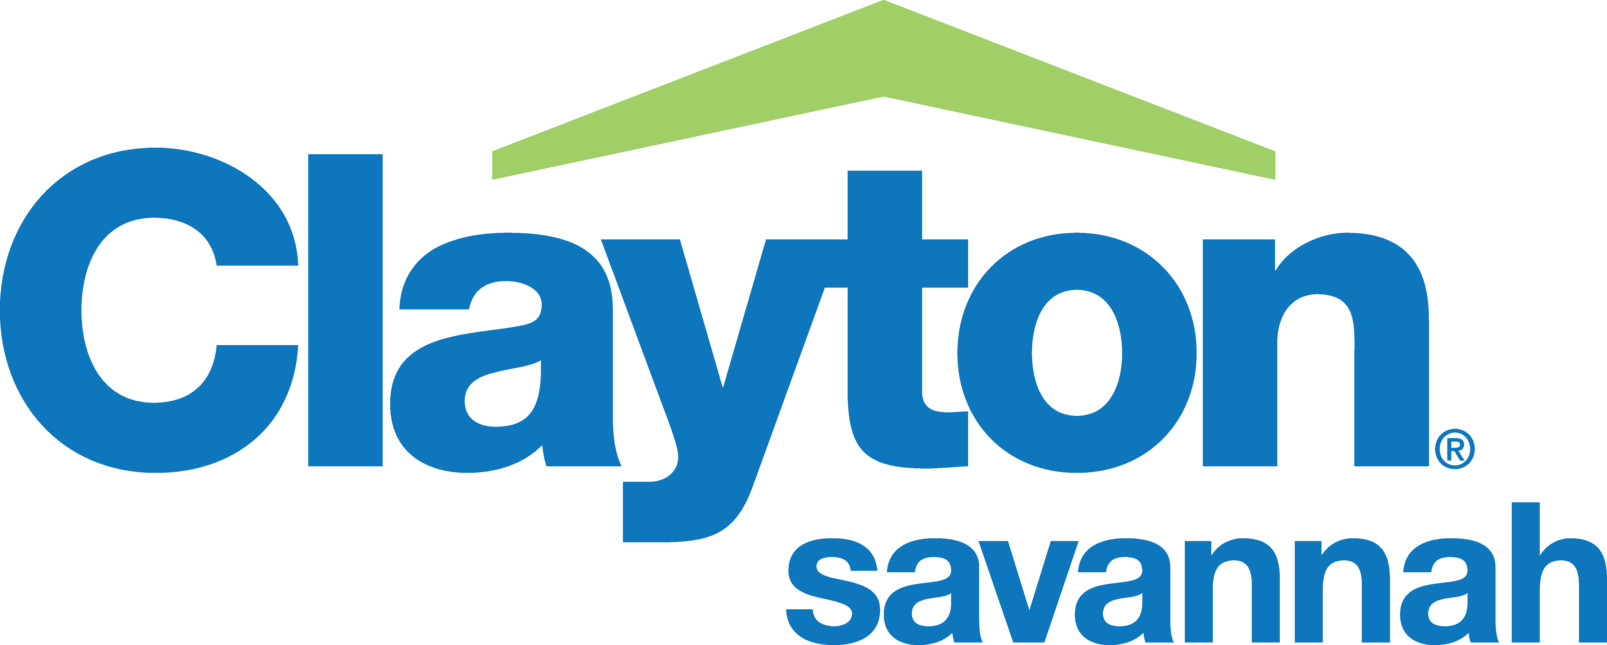 937 Clayton Savannah company logo